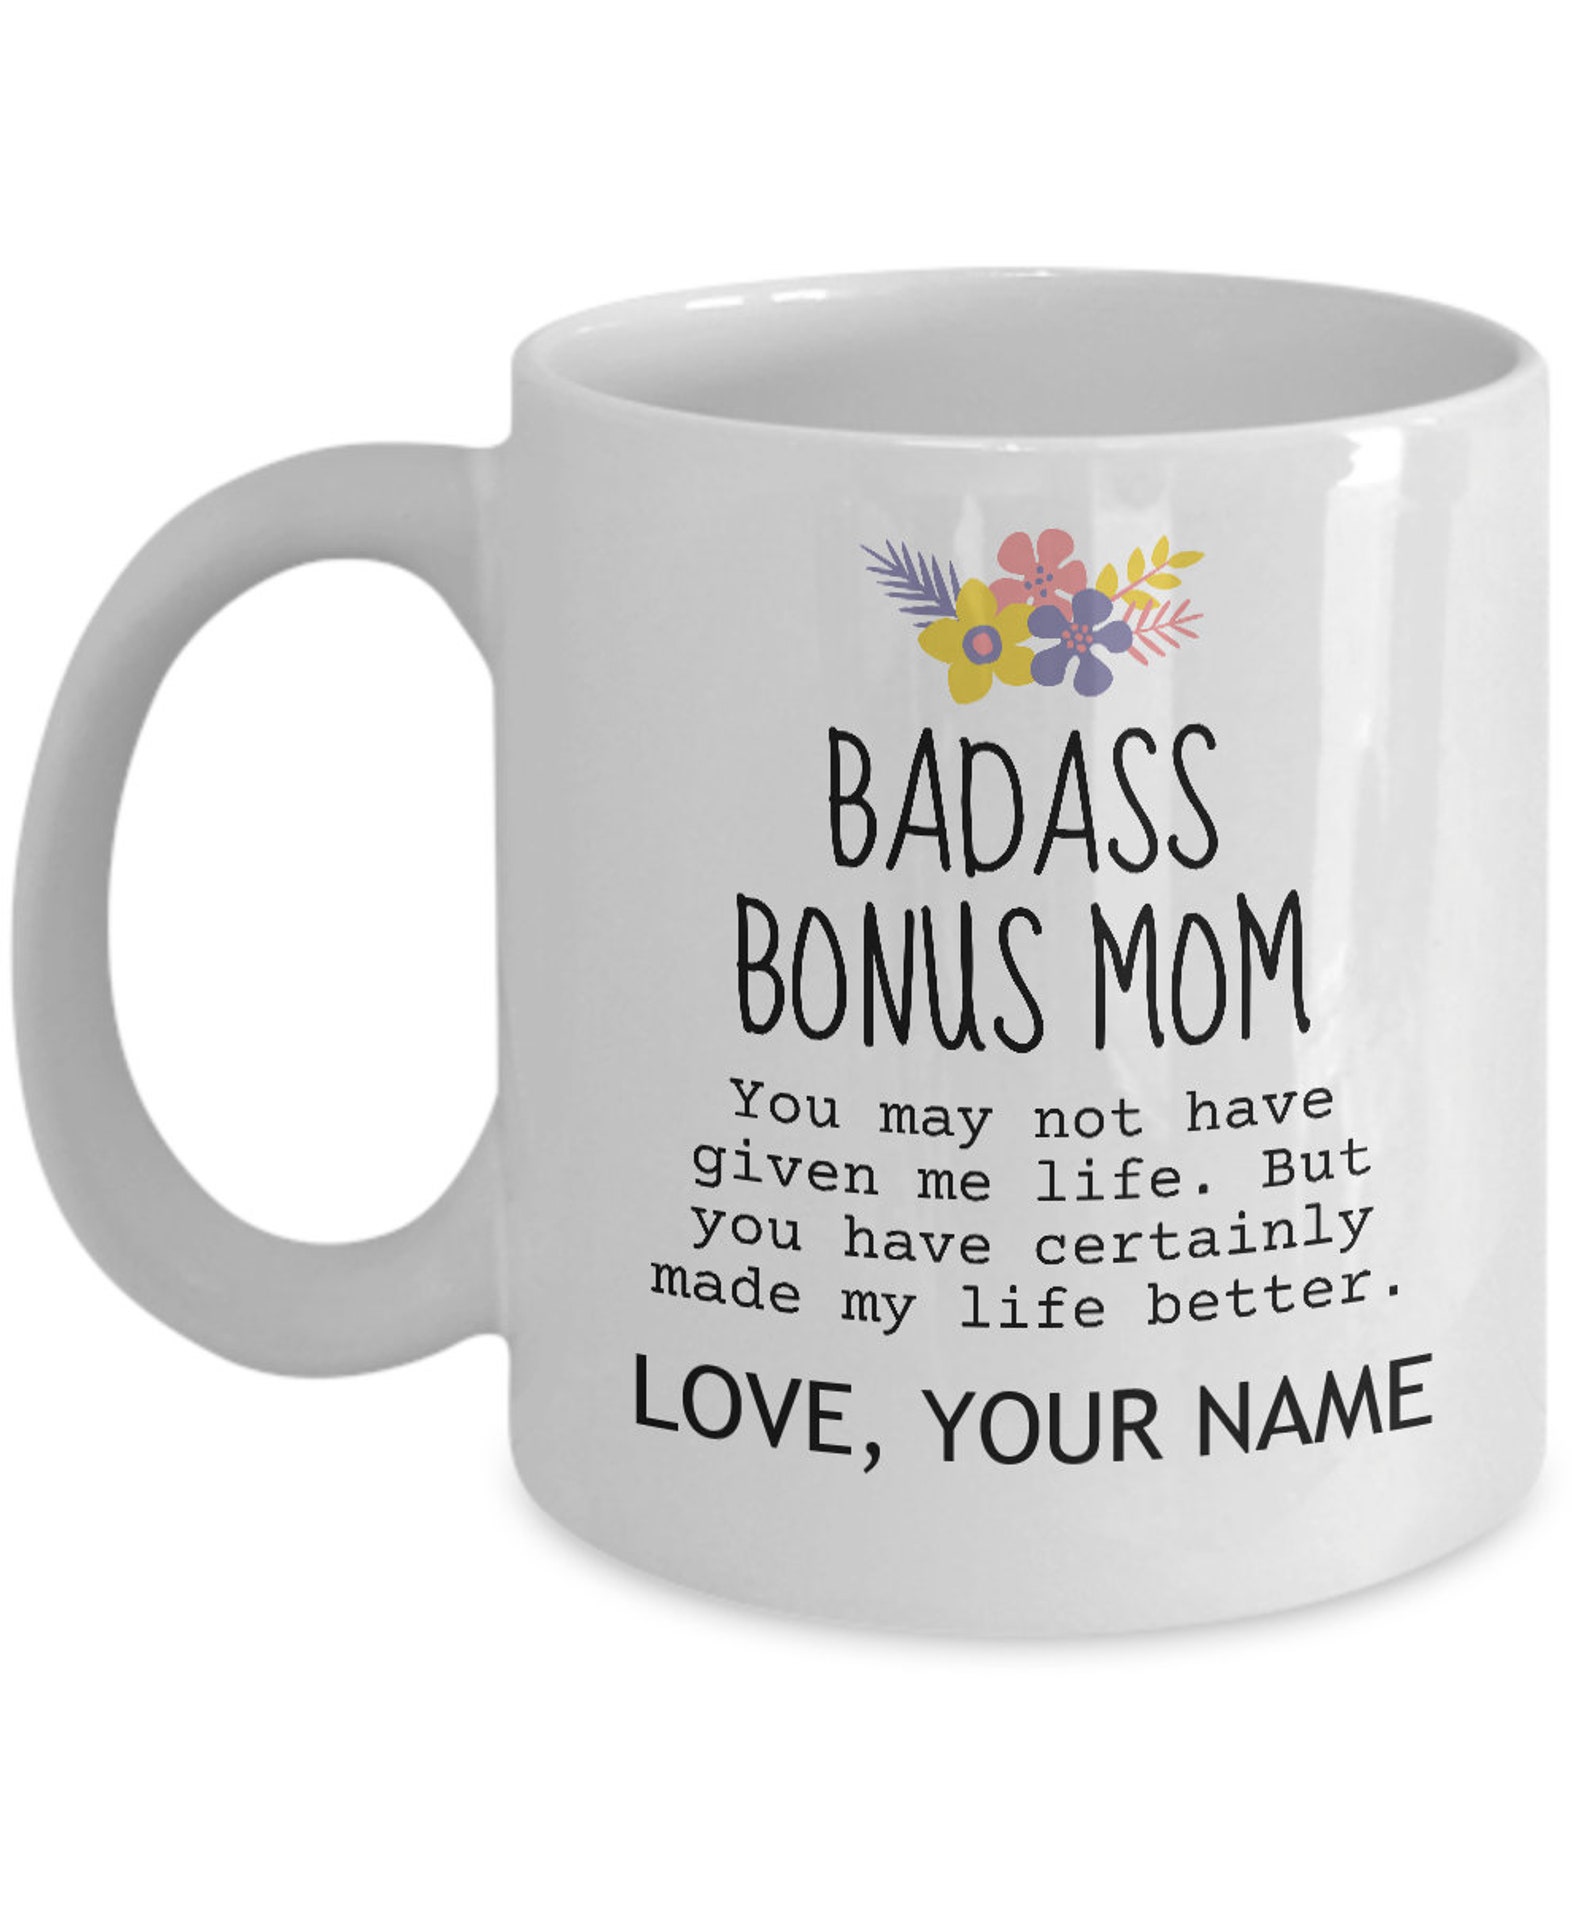 Bonus Mom Mug Badass Bonus Mom Great Mothers Day T Etsy